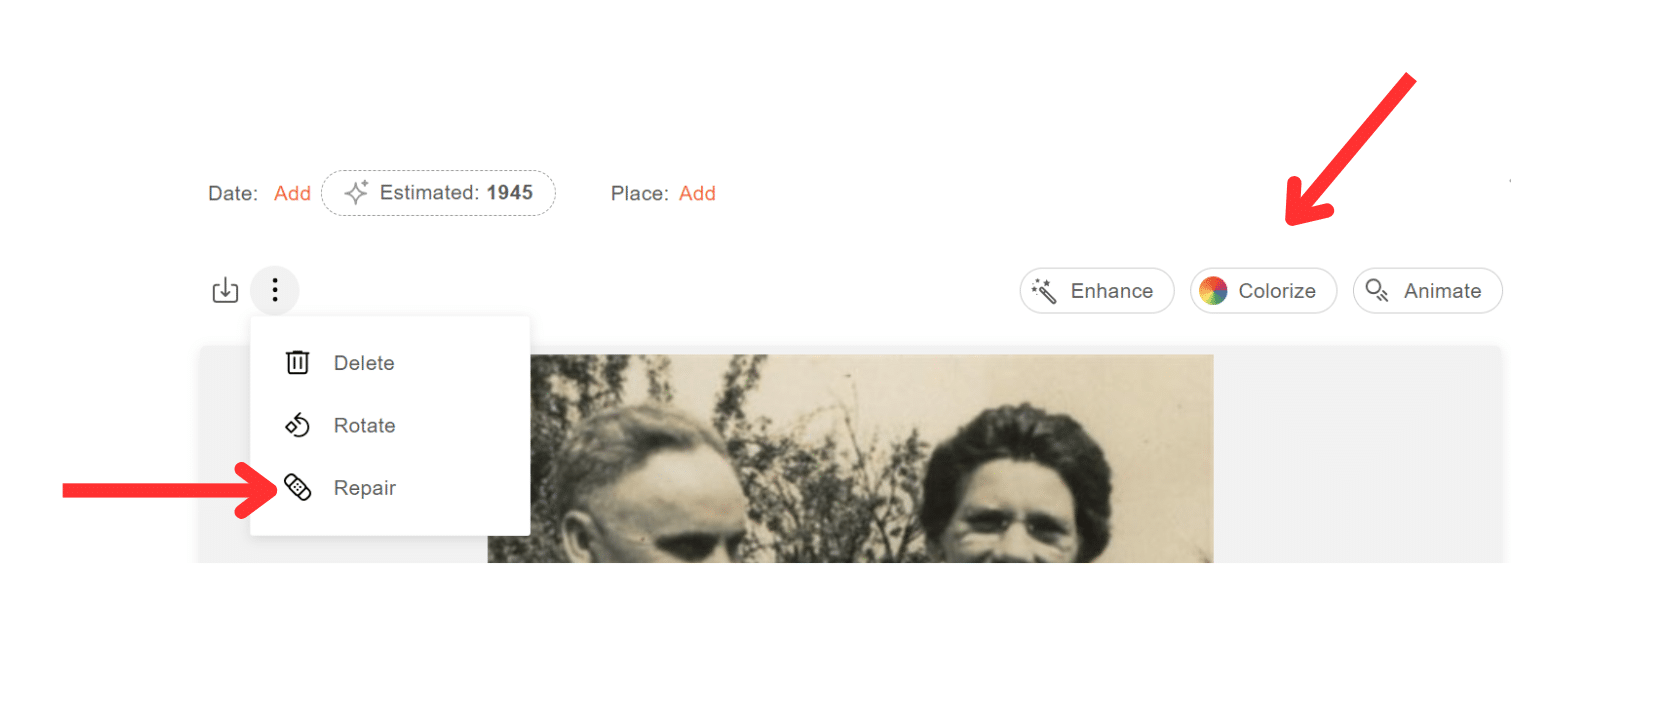 MyHeritage photo enhancement tools